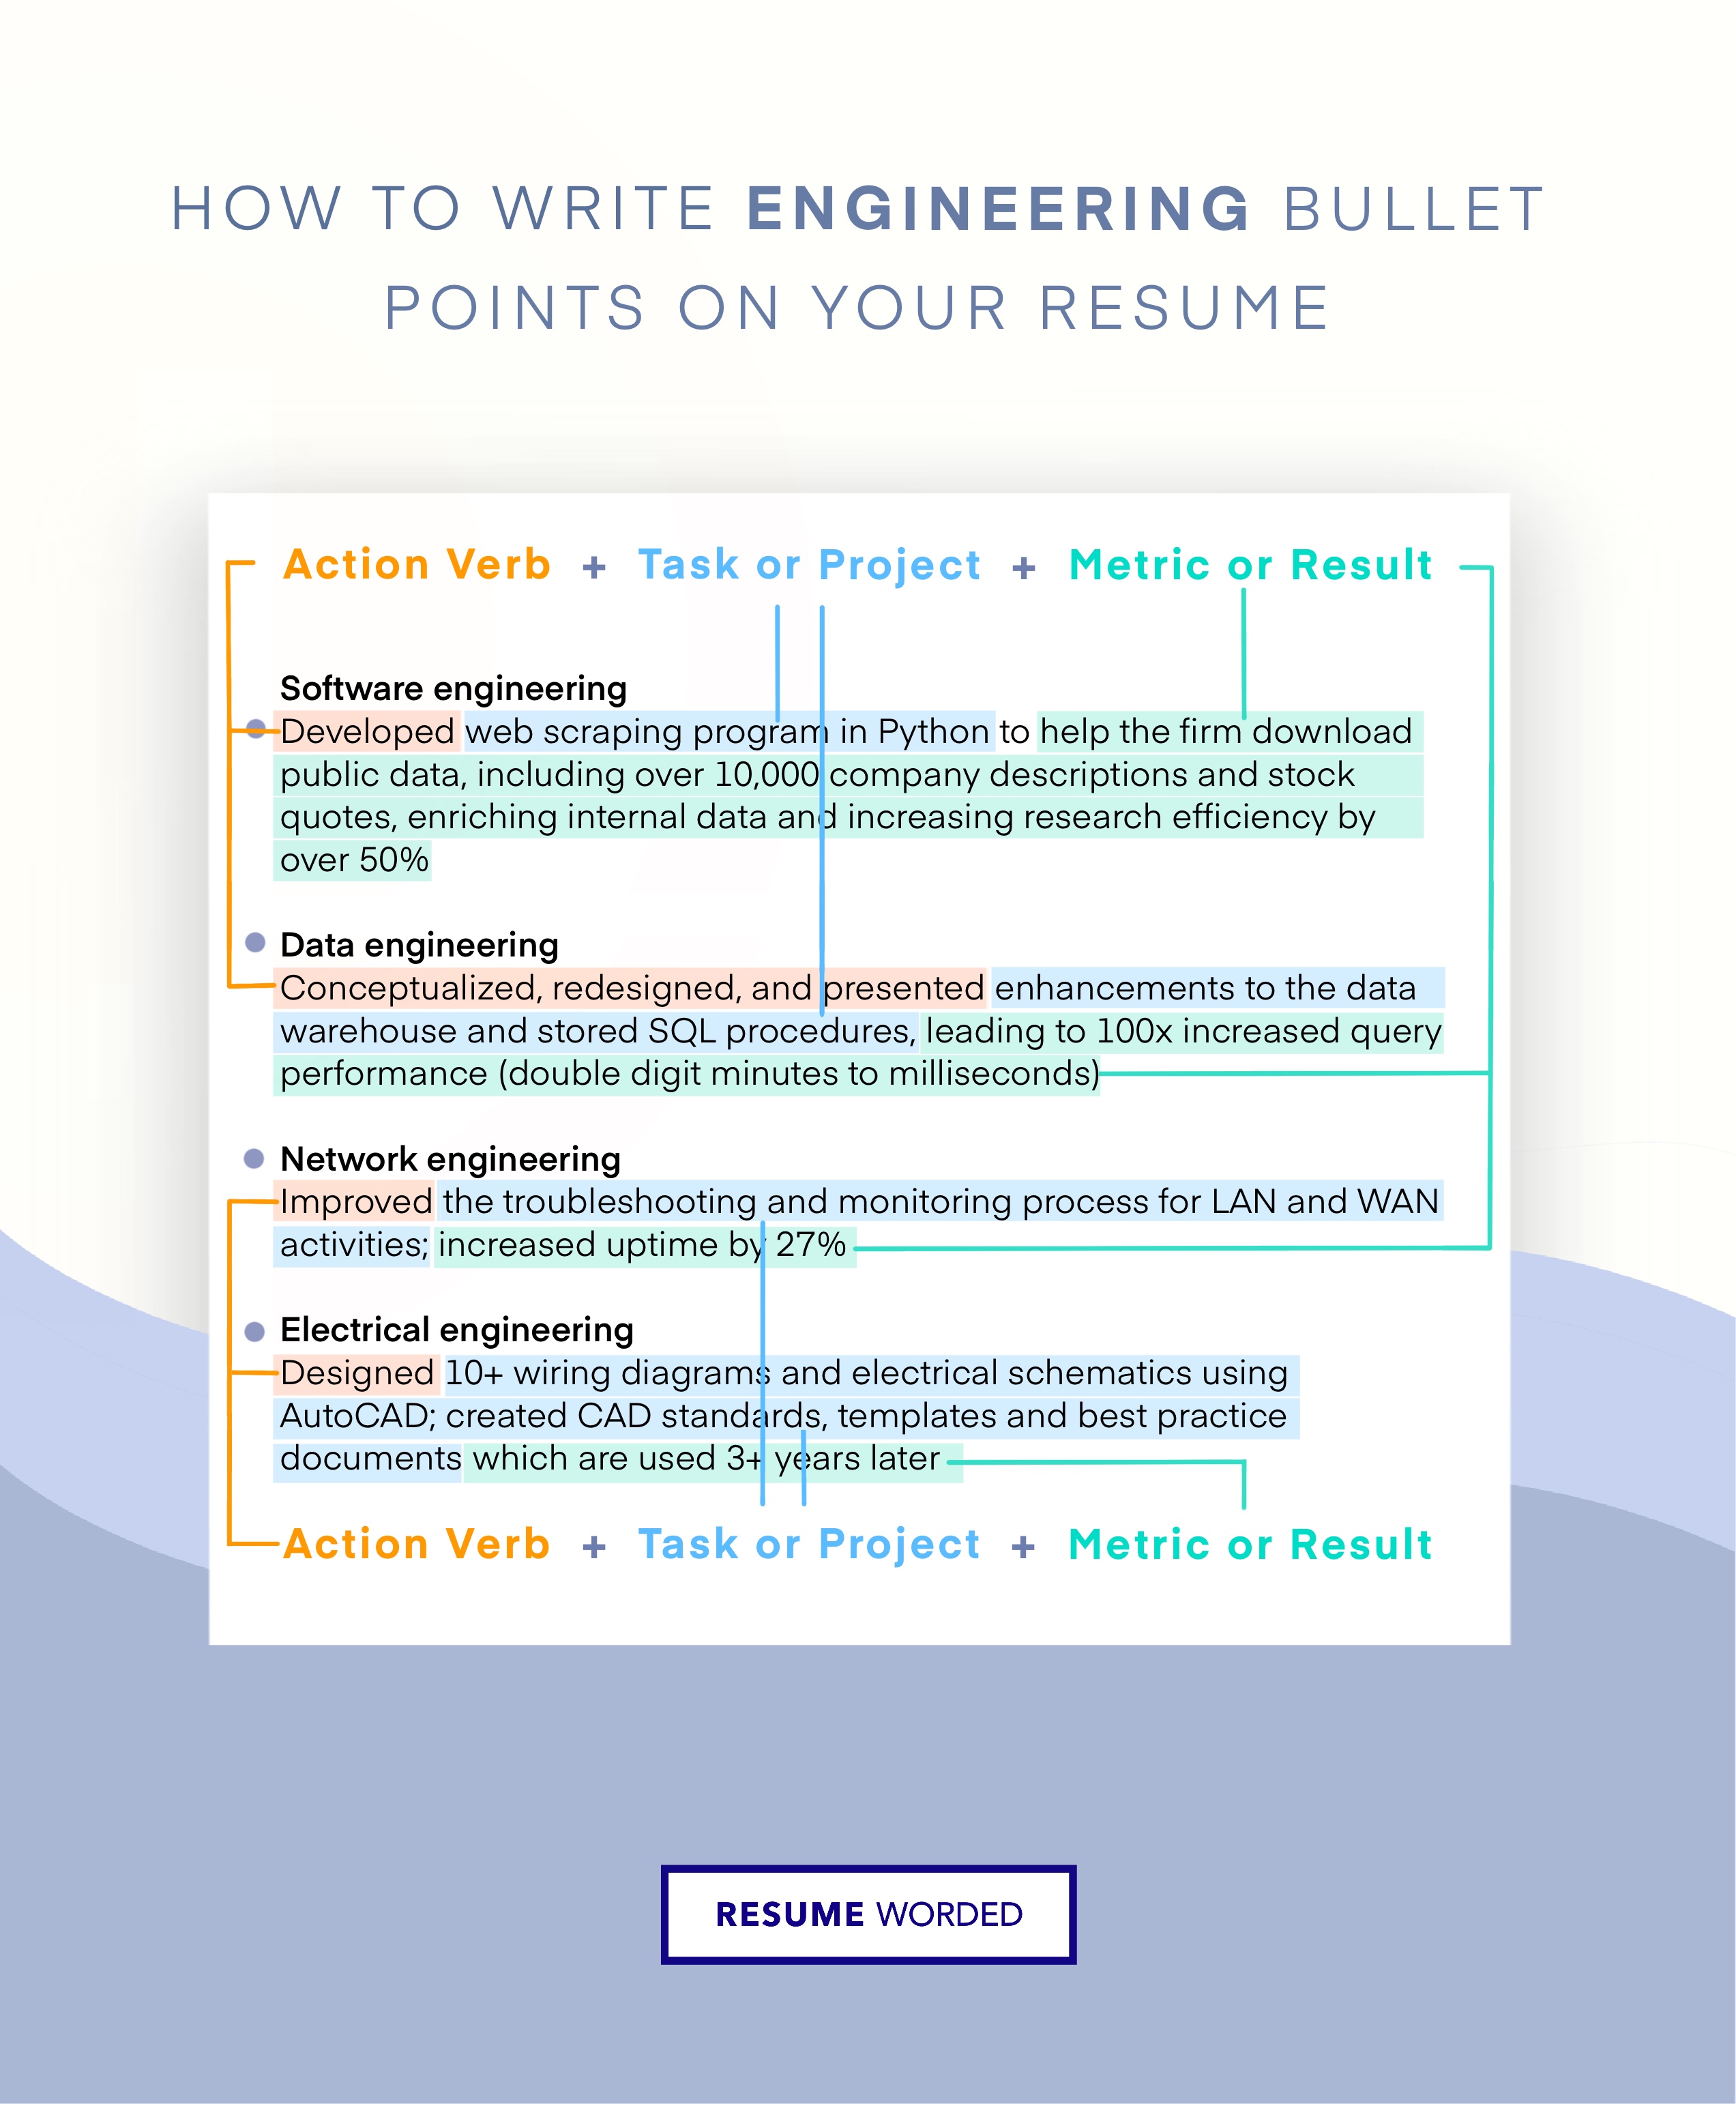 Technical skills beyond the basics - Software Engineering Lead CV